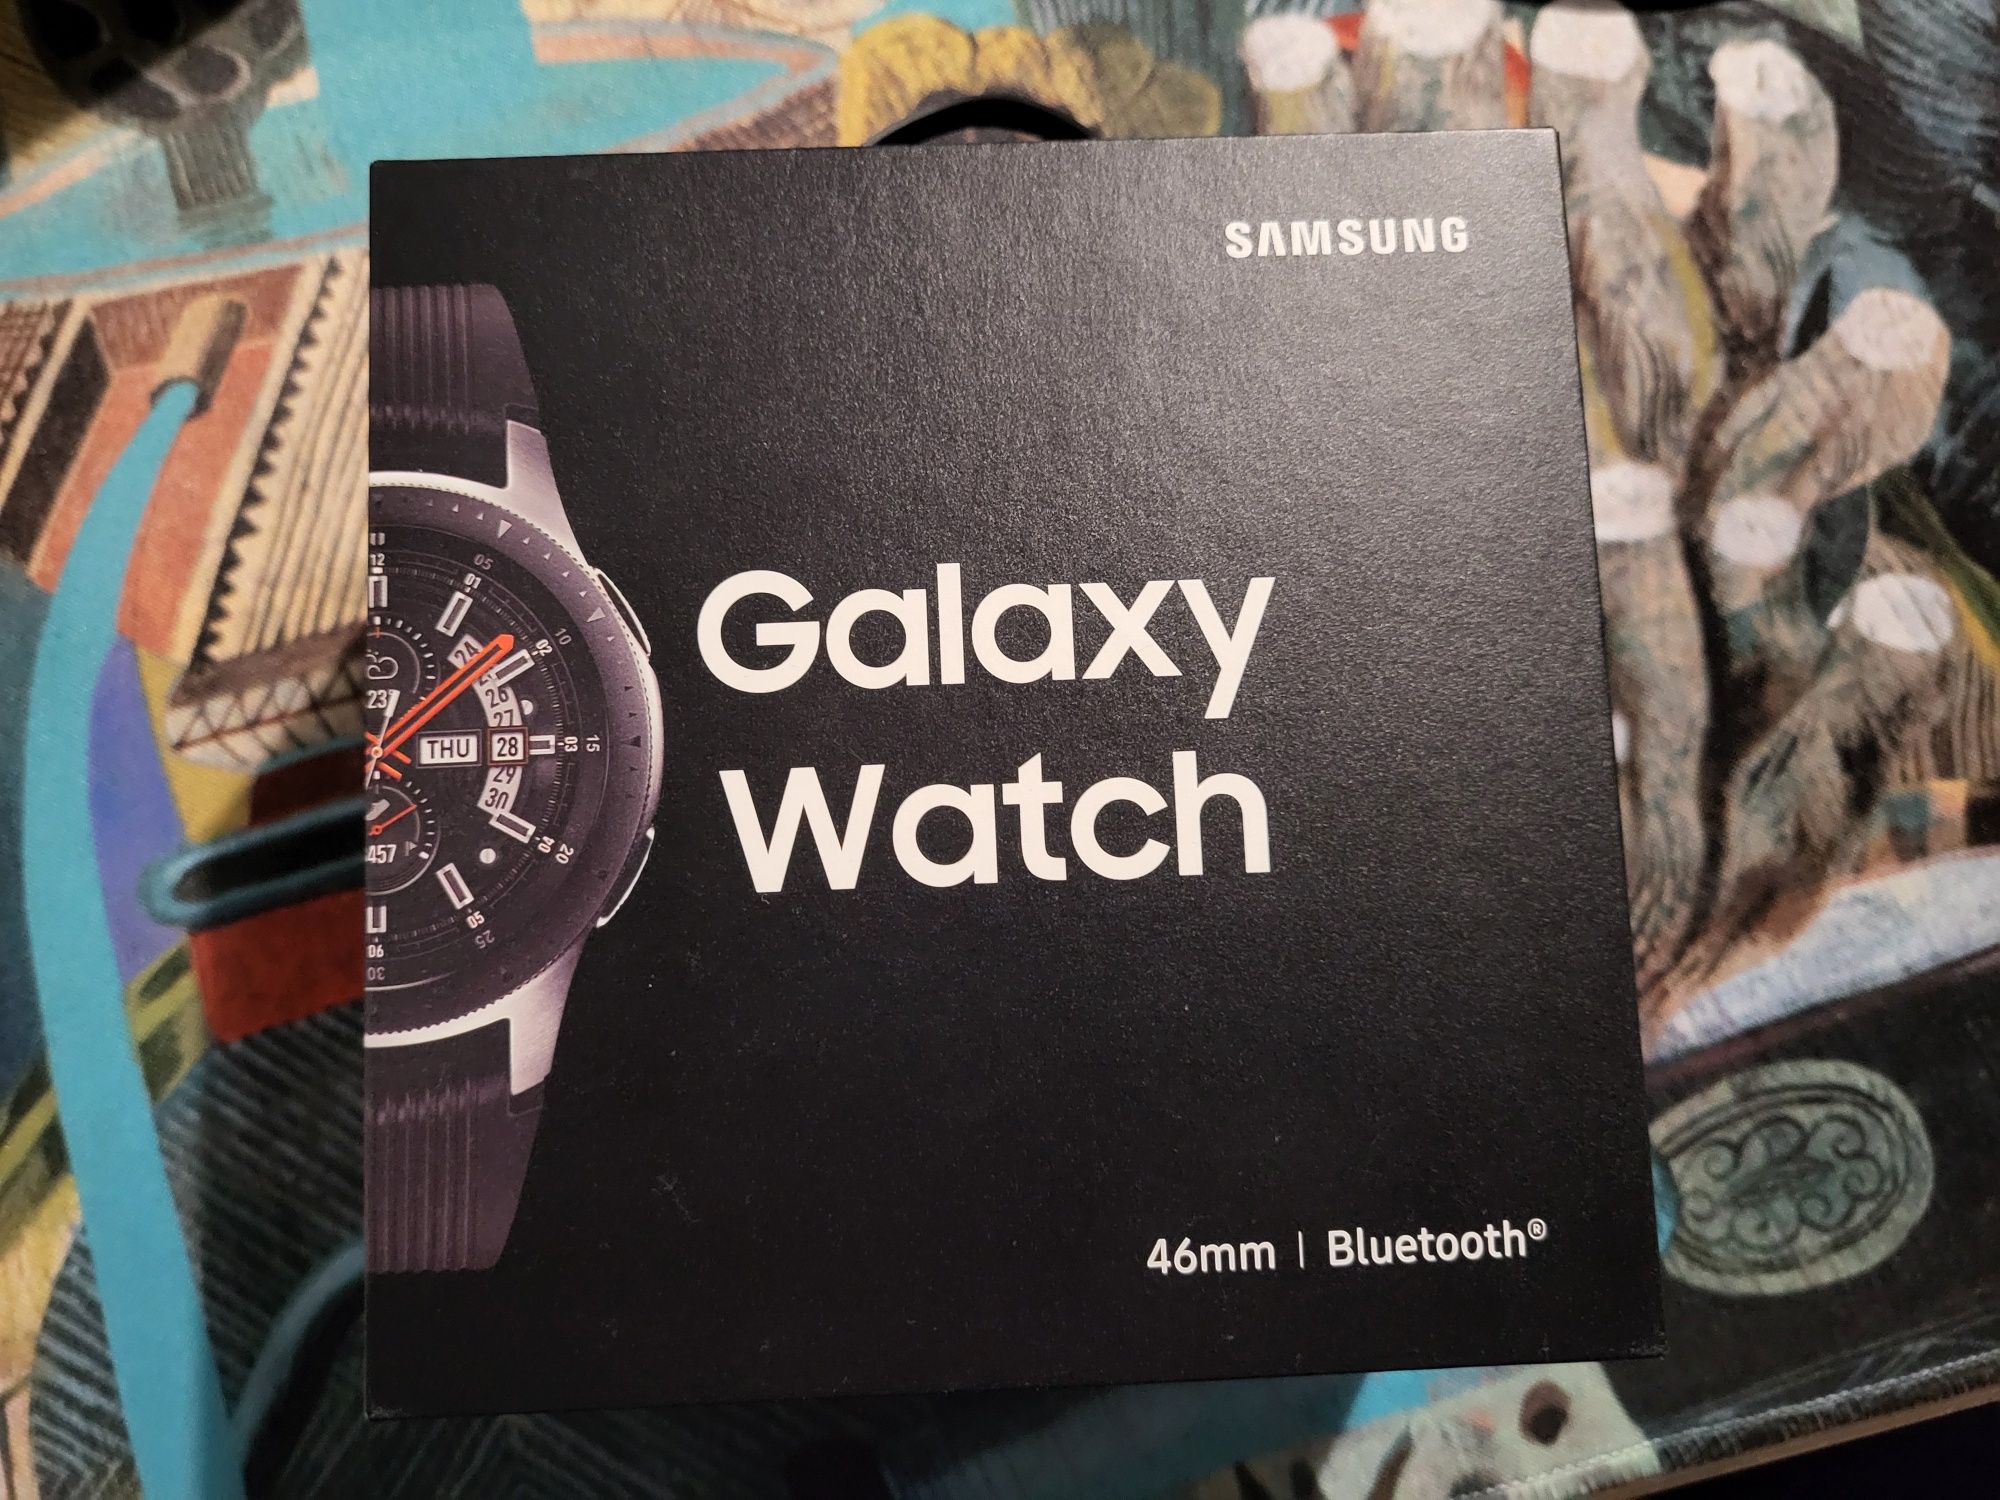 Samsung Galaxy Watch Bluetooth 46 mm SM-R800 + dodatki